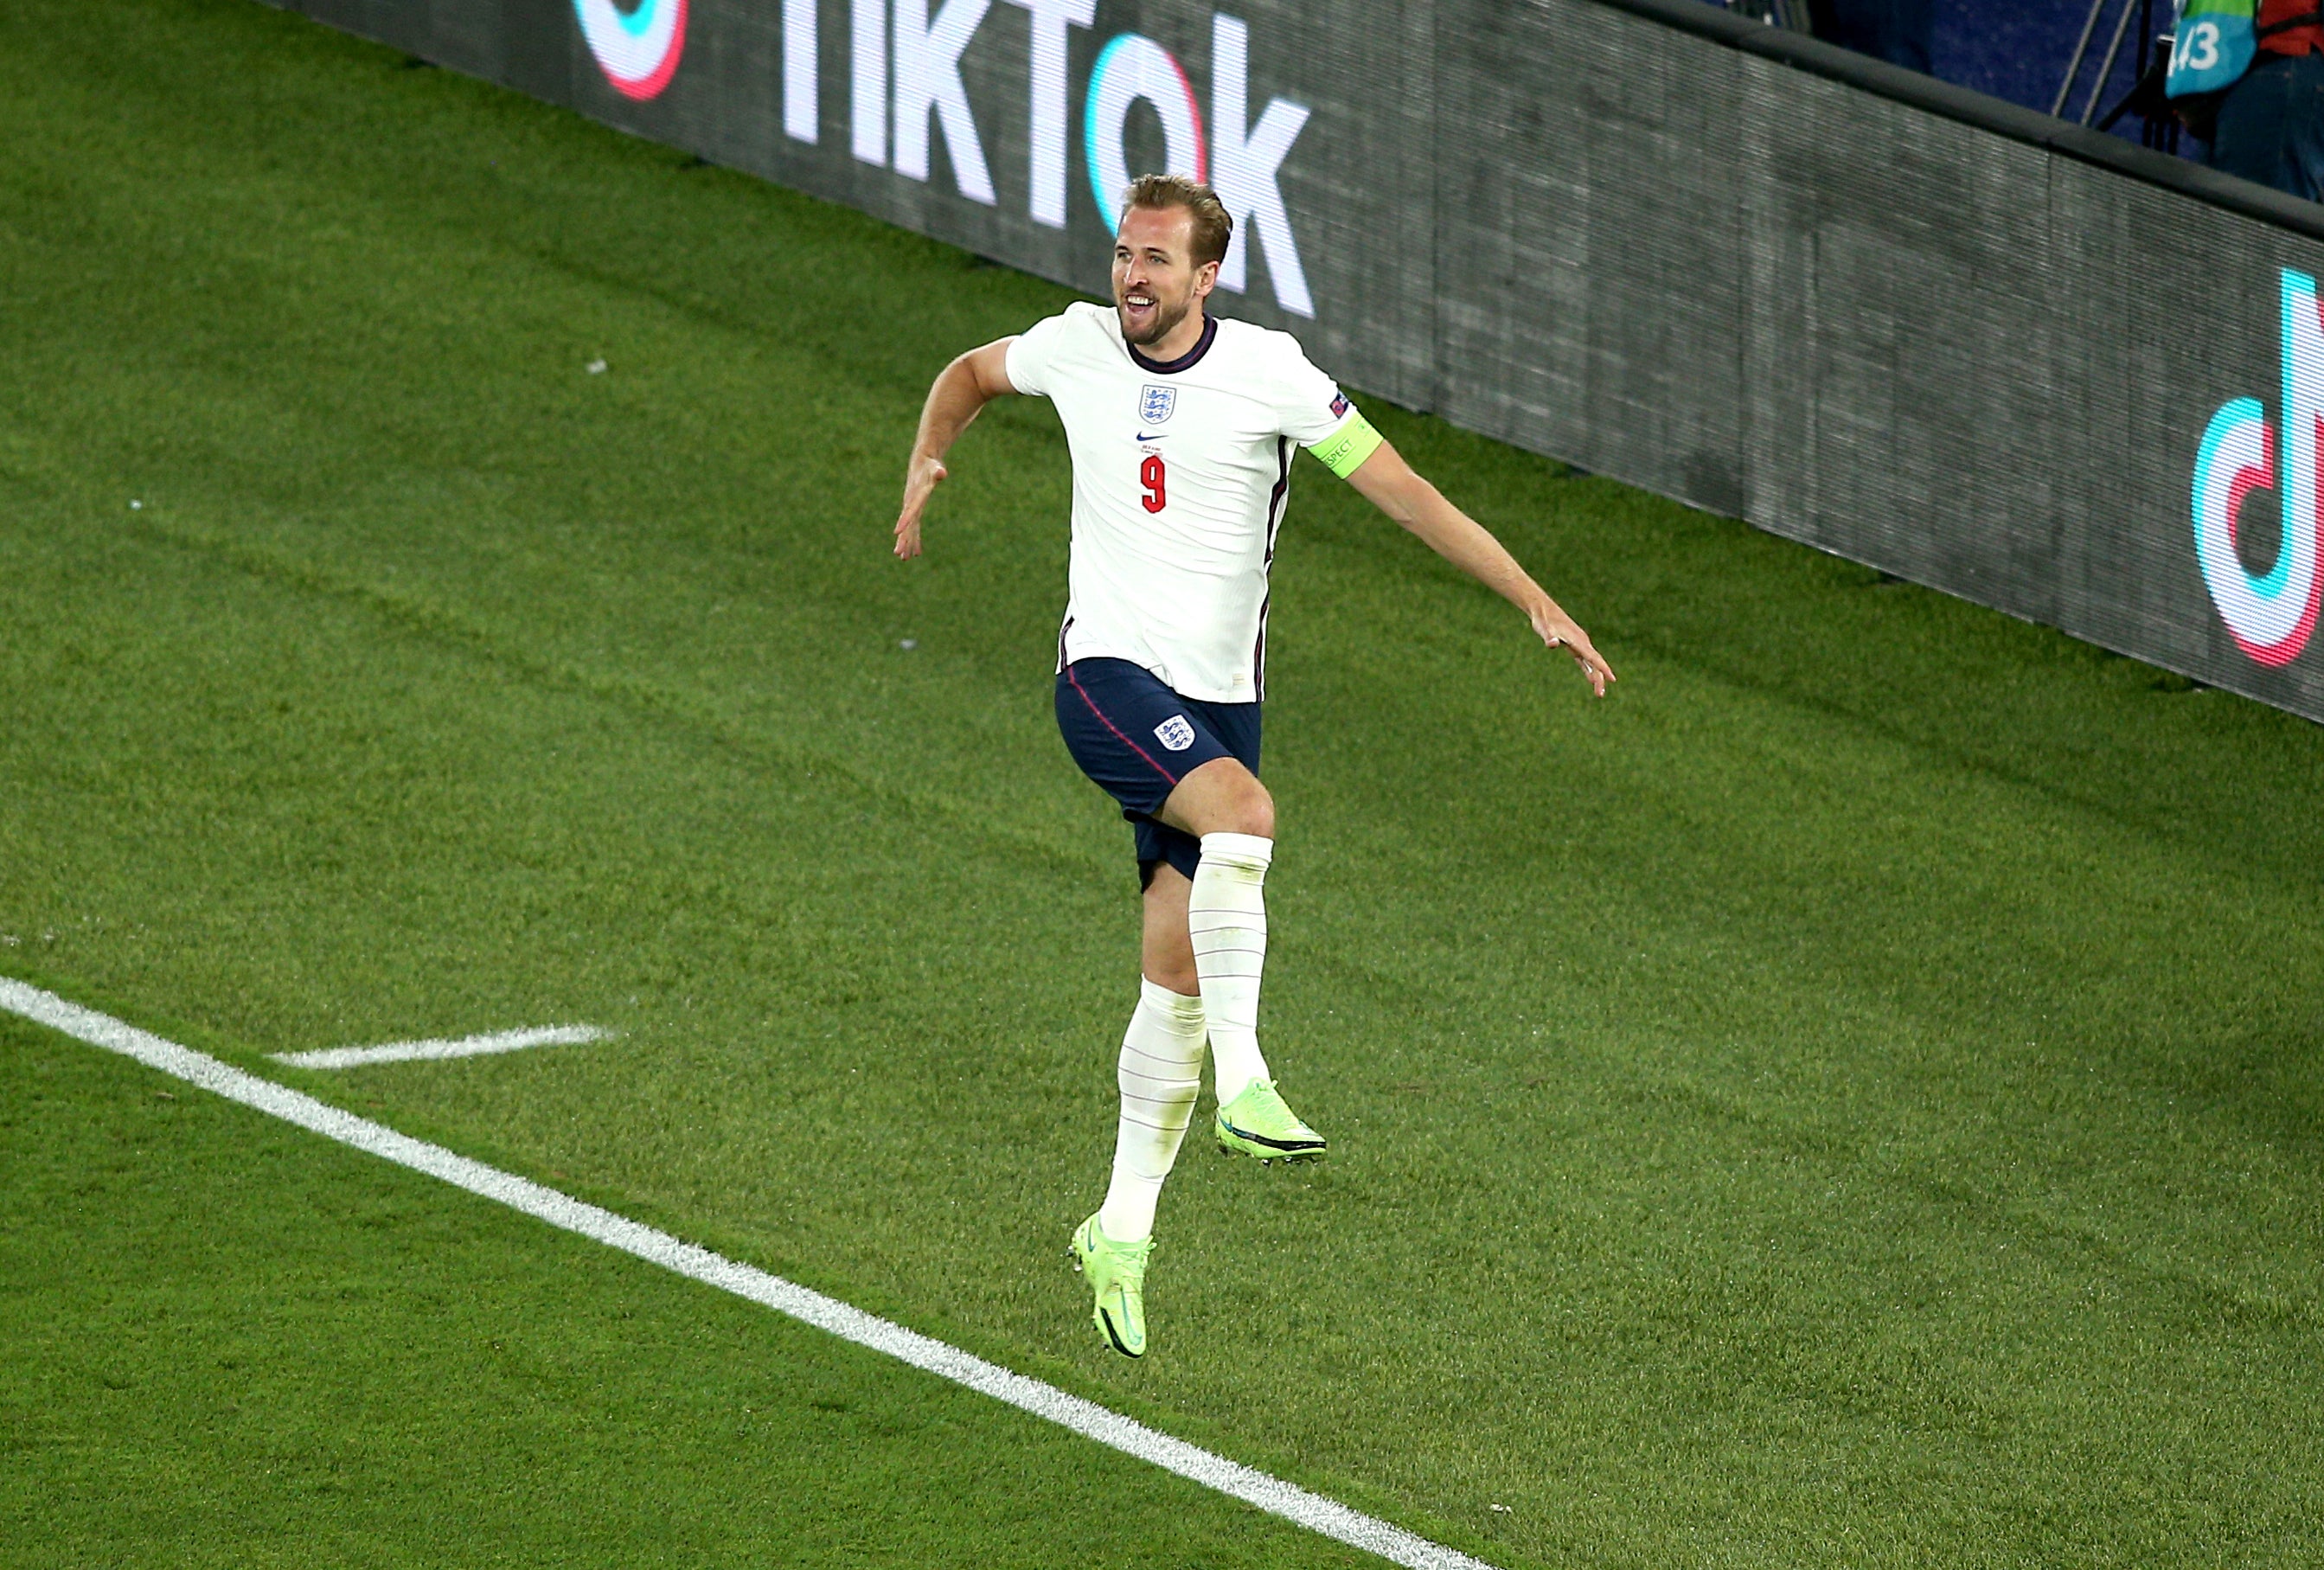 Kane celebrates scoring England’s third goal of the Euro 2020 quarter-final win over Ukraine (Marco Iacobucci/AP)